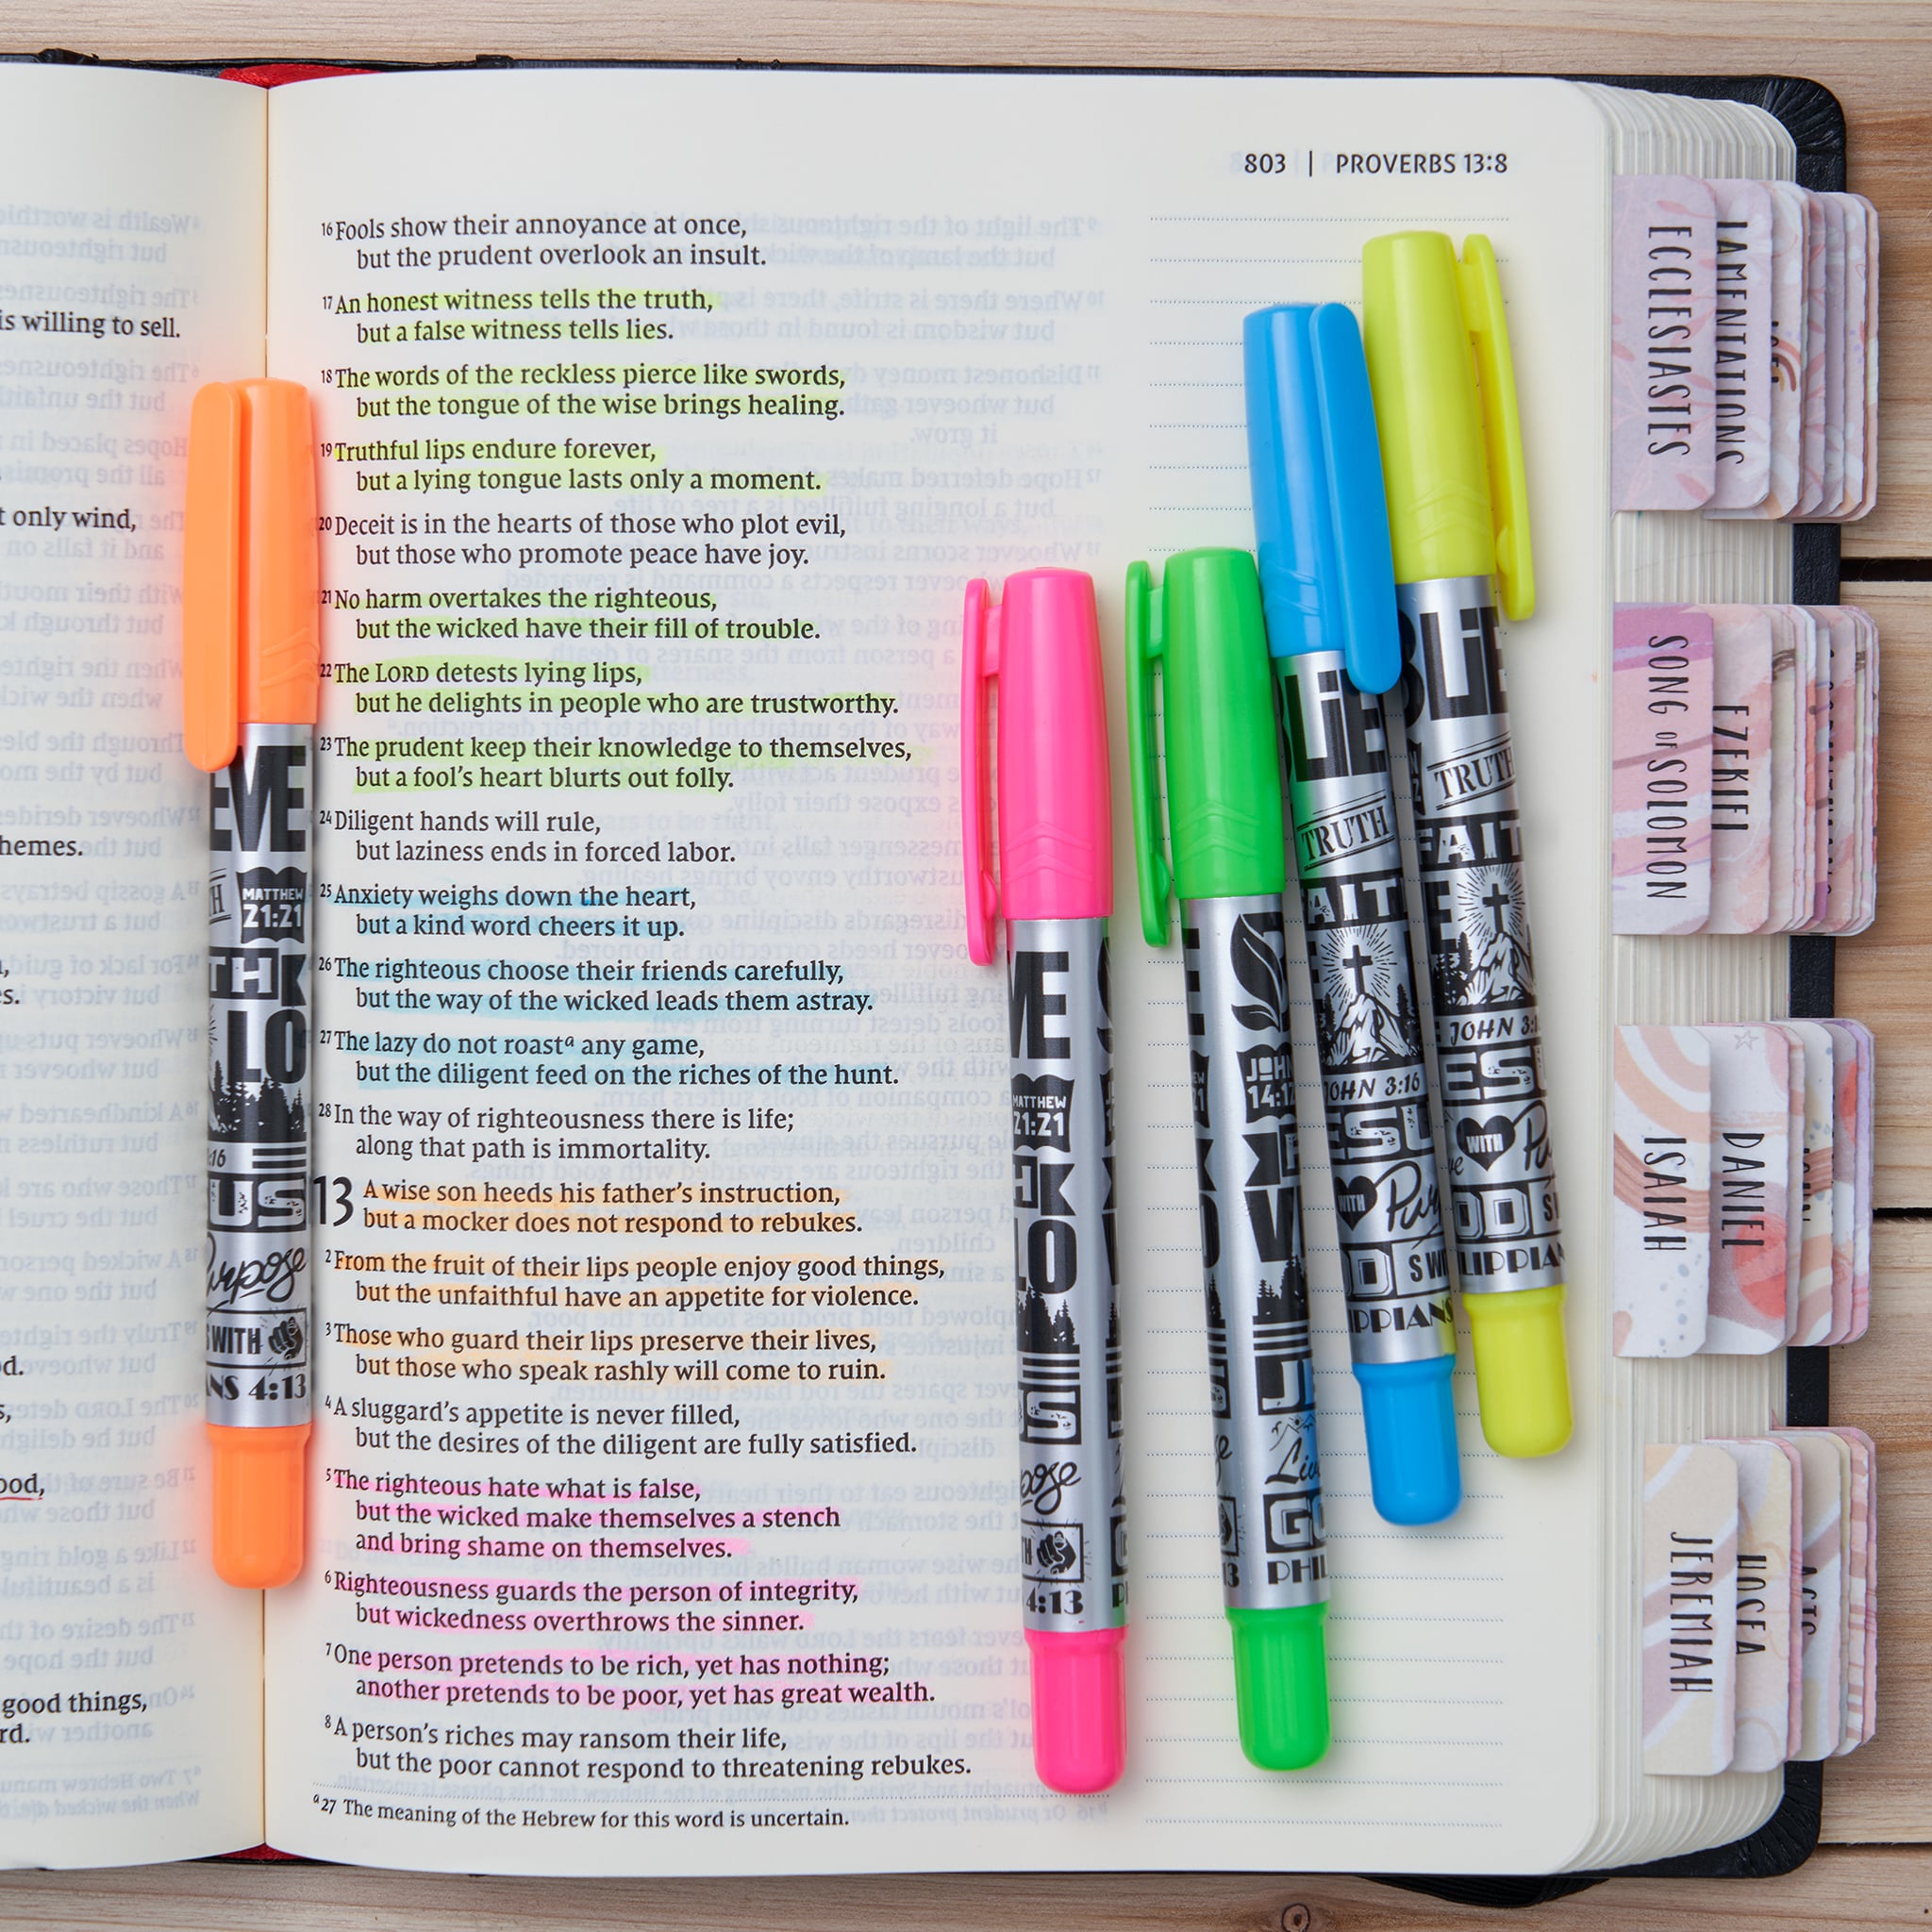 Bible Journaling 17 Piece Kit (Other) 